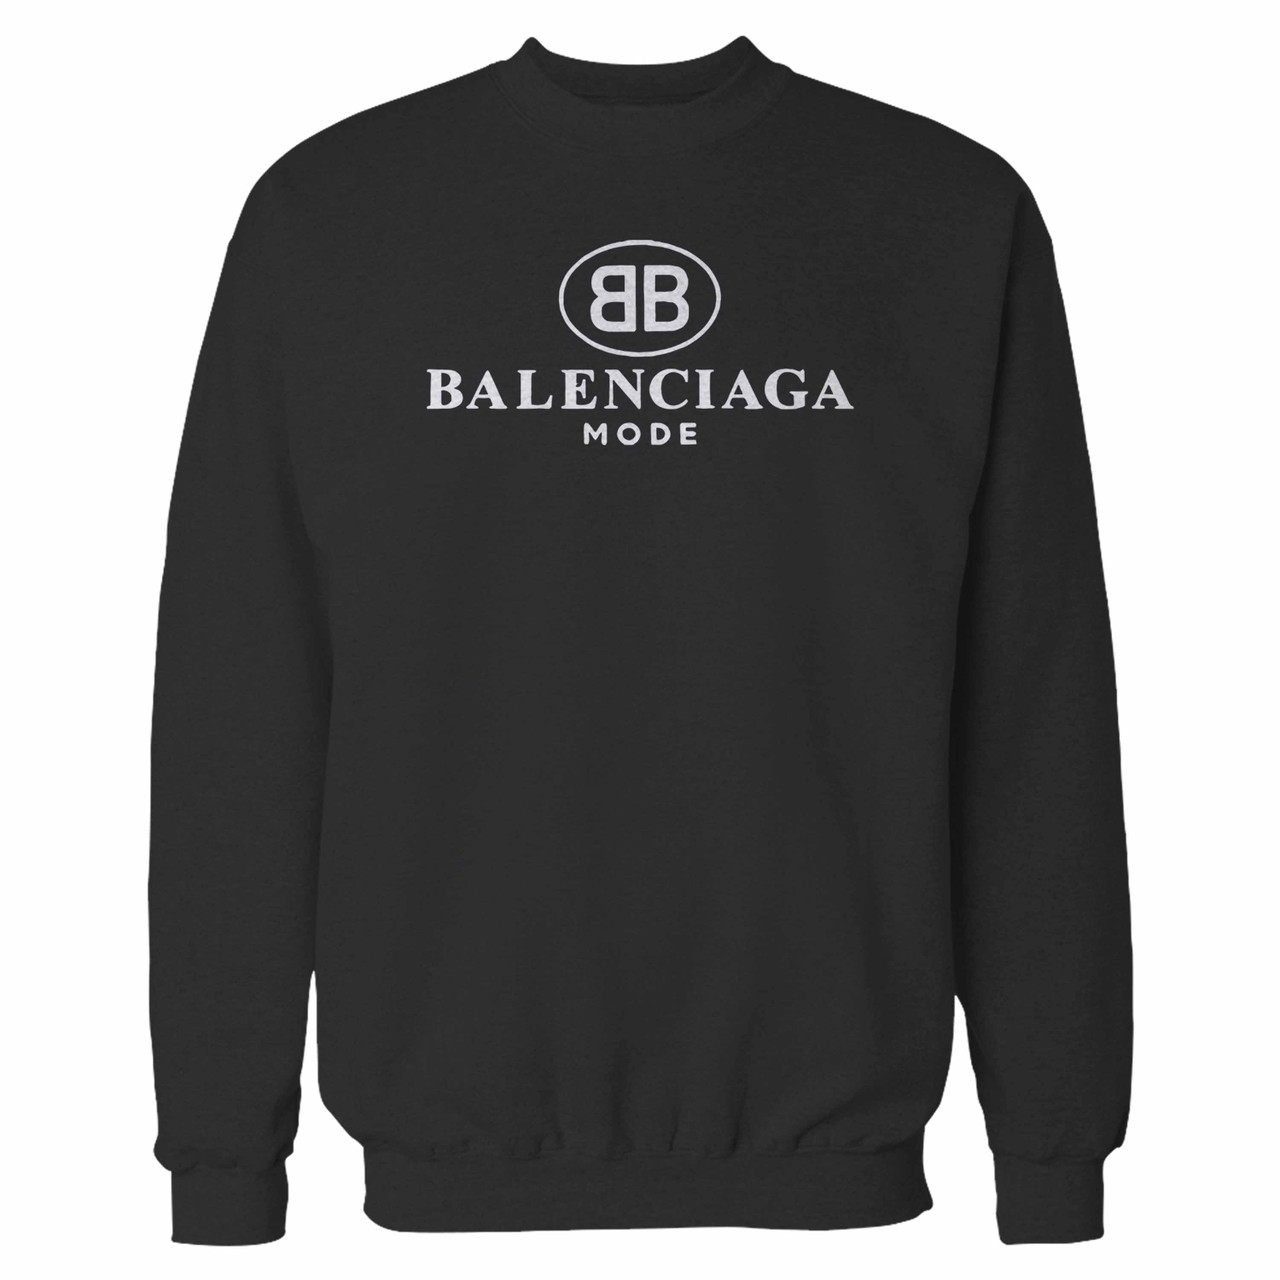 Balenciaga Bb Mode Crewneck Sweatshirt